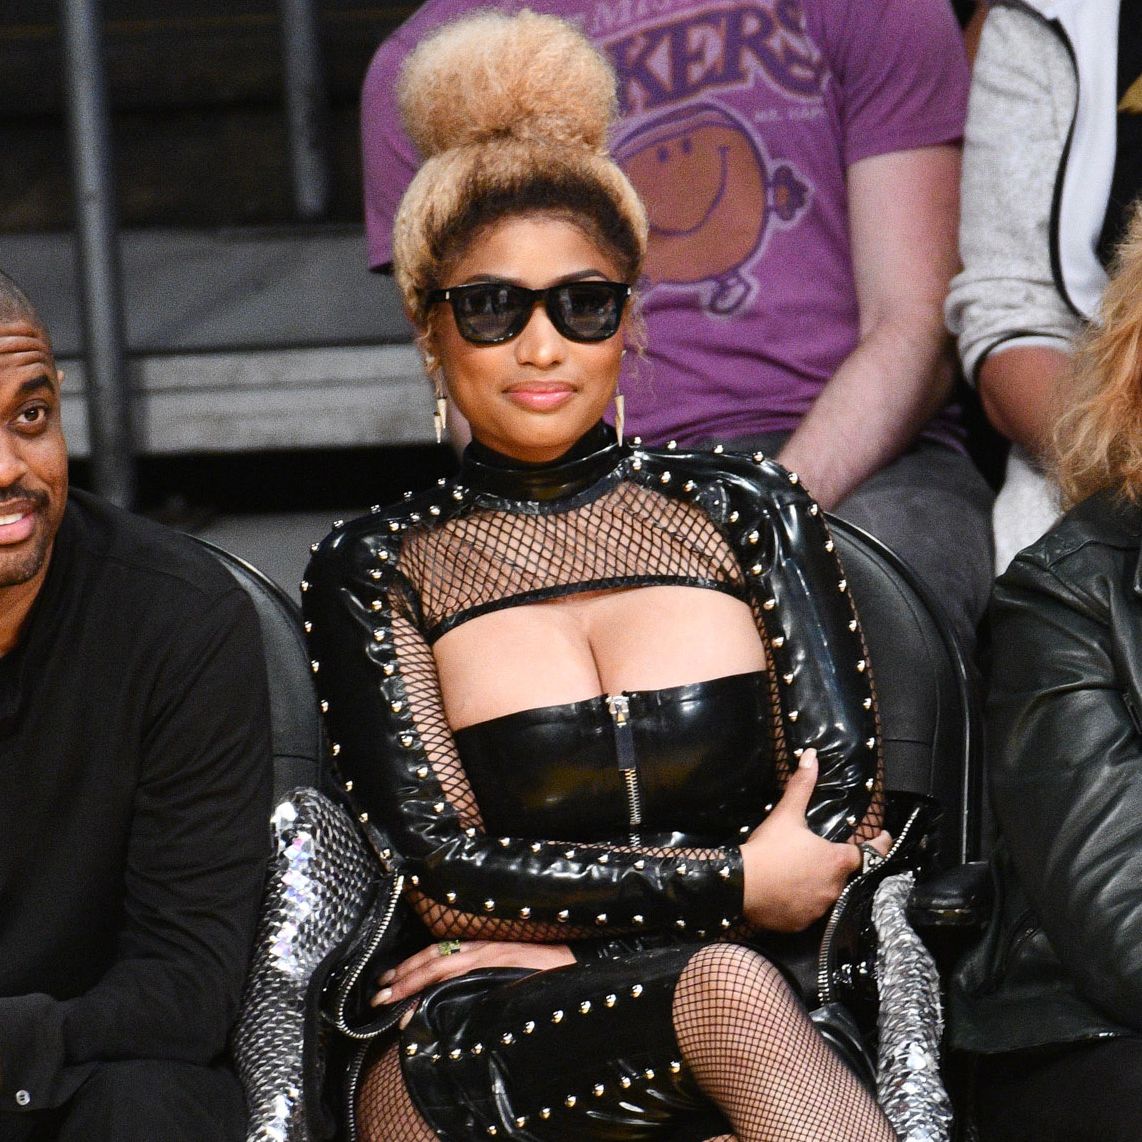 Nicki Minaj Leather Bondage Outfit Courtside Lakers Game - Nicki Minaj  Basketball Game Leather Outfit